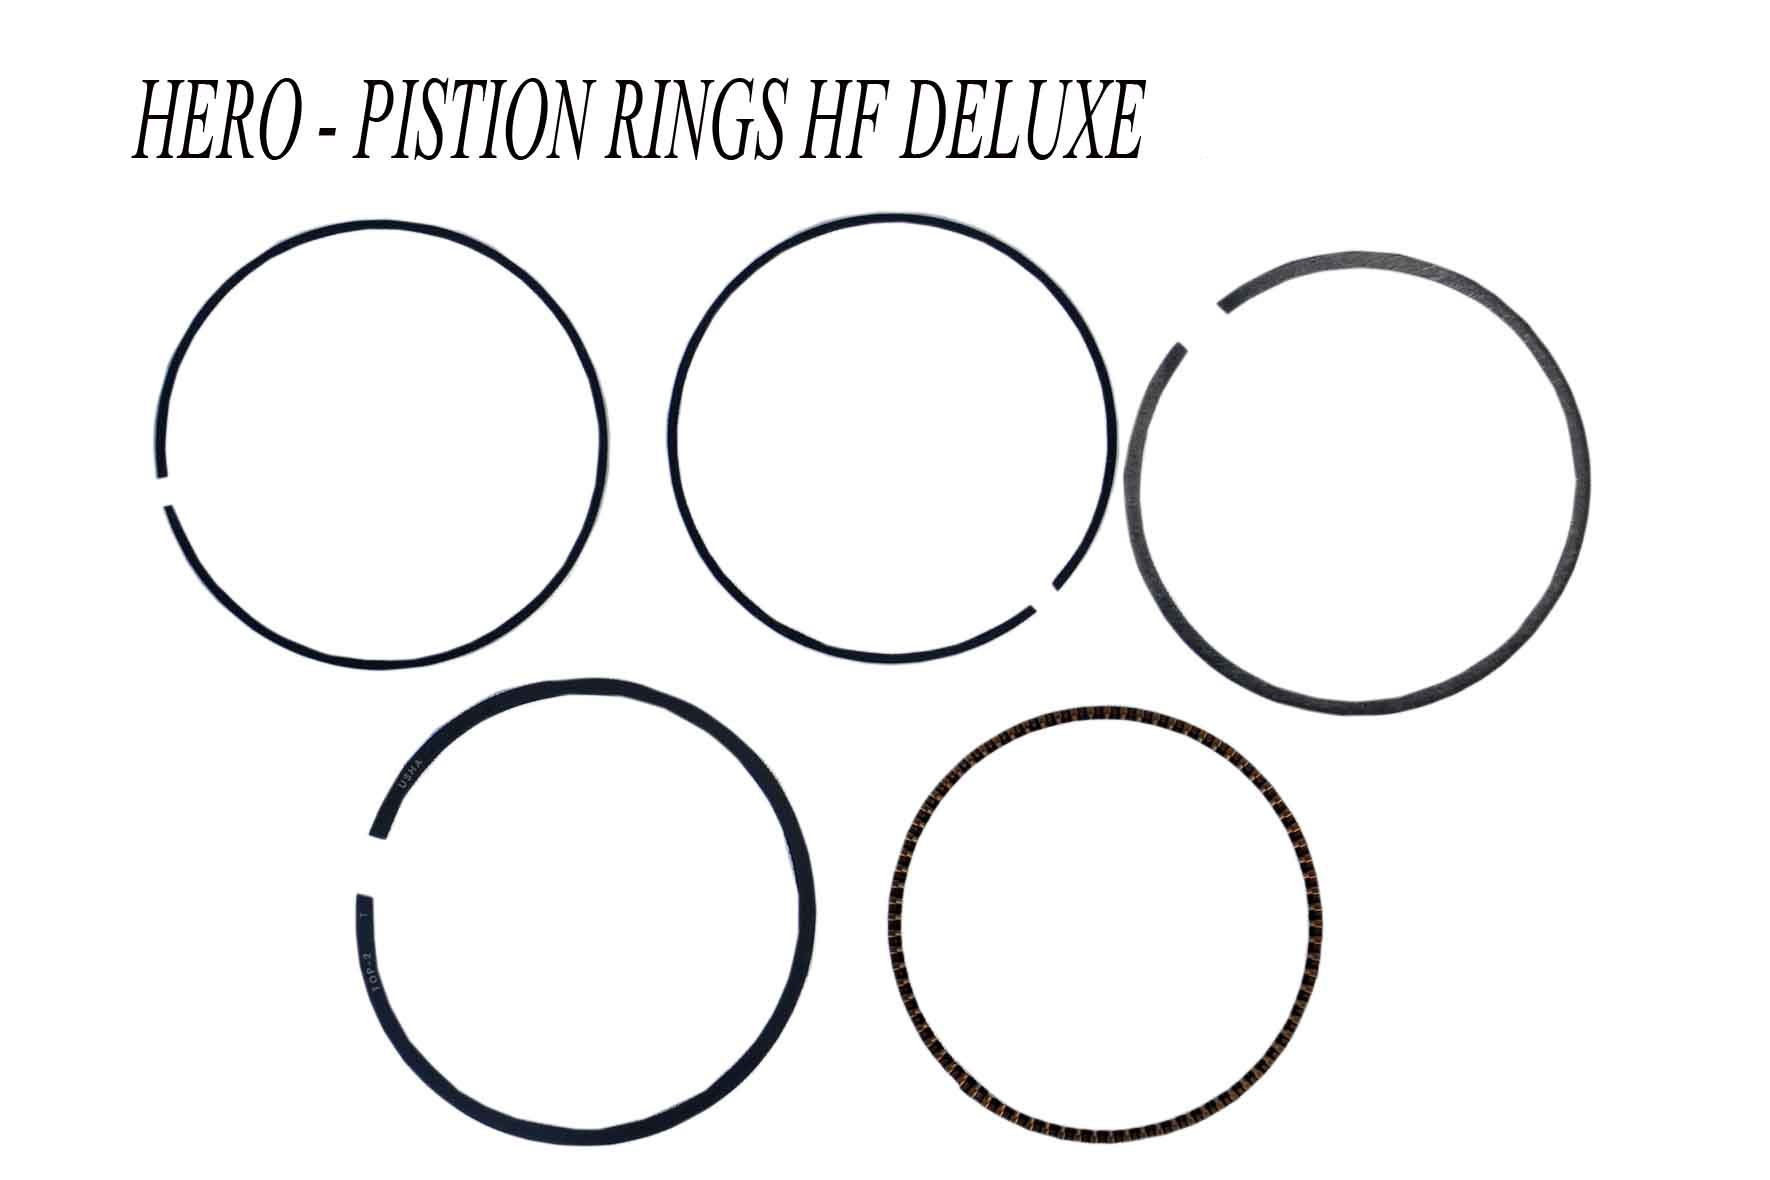 How to install piston ring | बाइक 5 साल तक धुआ नहीं देगी | Ring Piston  fitting | bs4 bs6? - YouTube